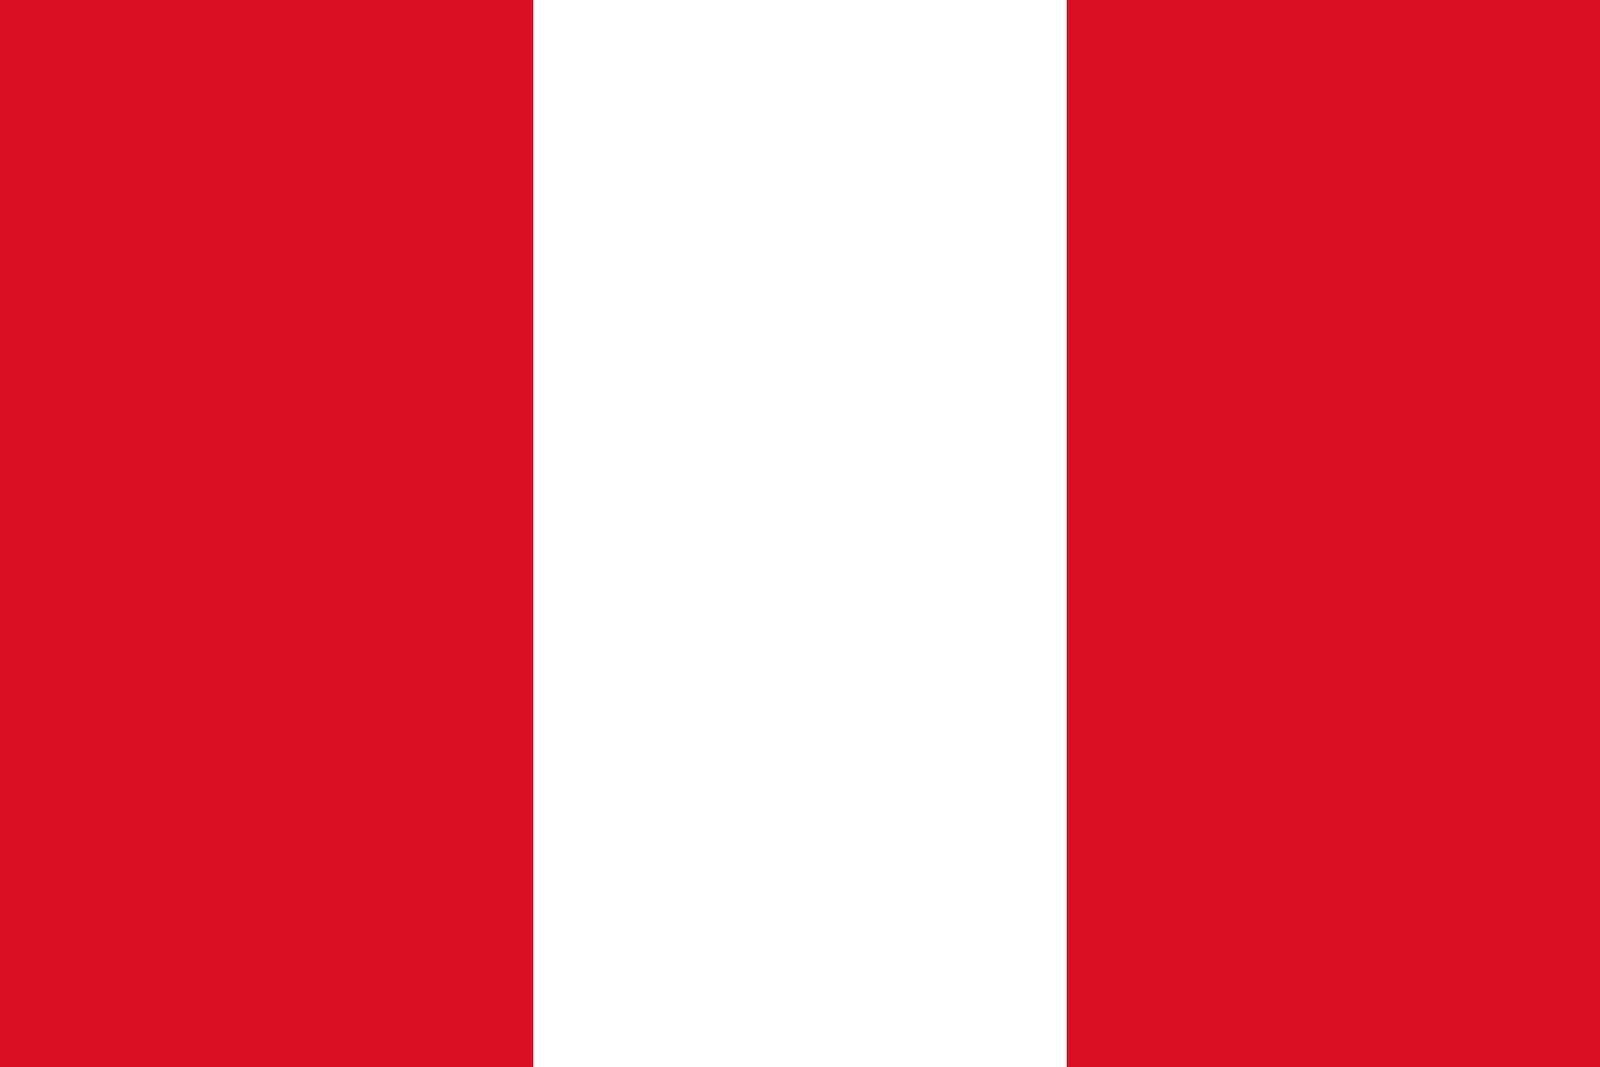 Flaga Peru puzzle online